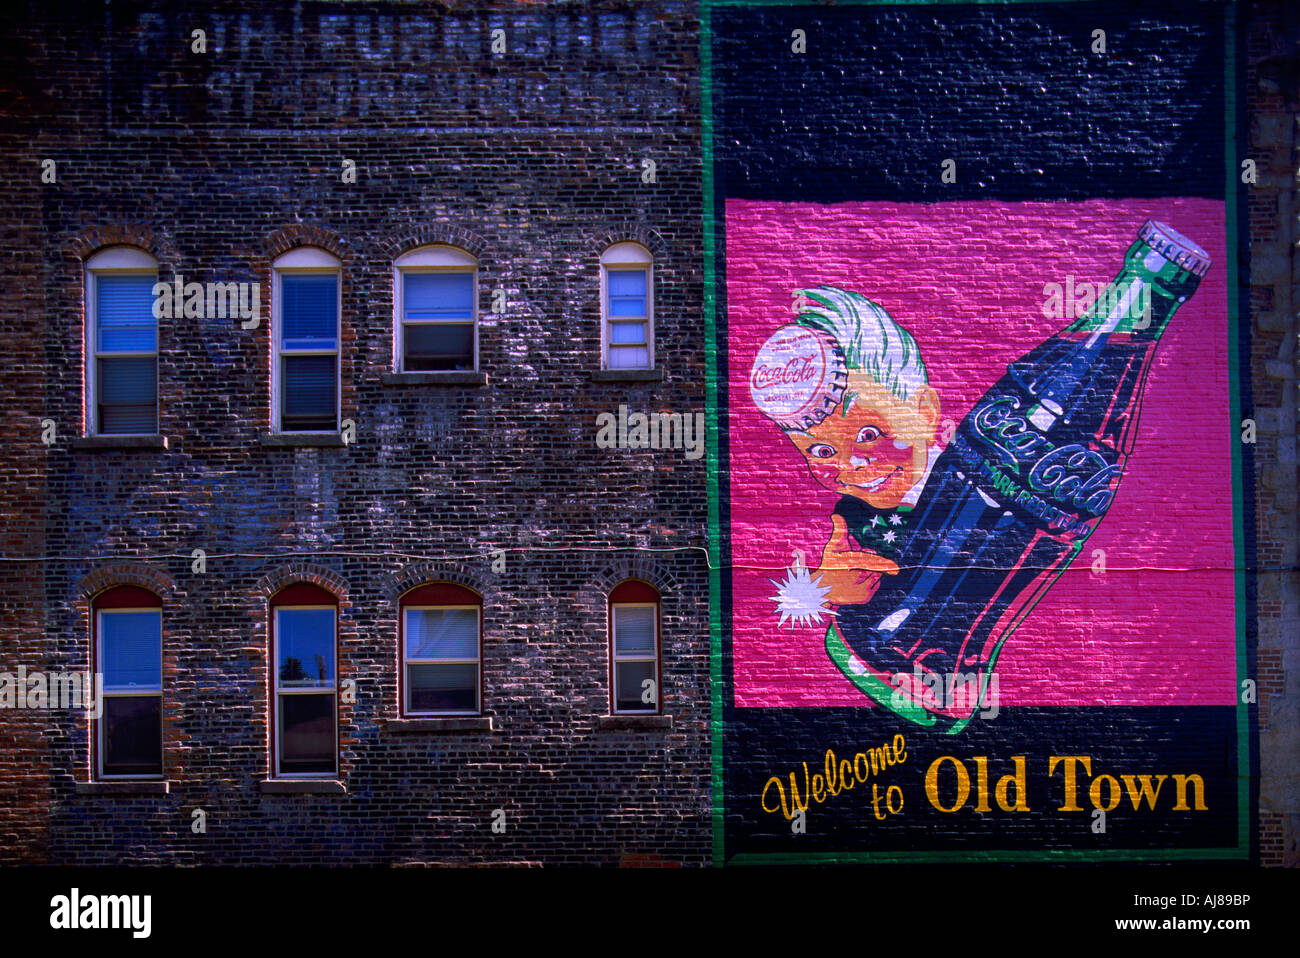 Coca Cola Advertising on Old Brick Building Facade, Old Town Bellingham, Washington, USA Stock Photo